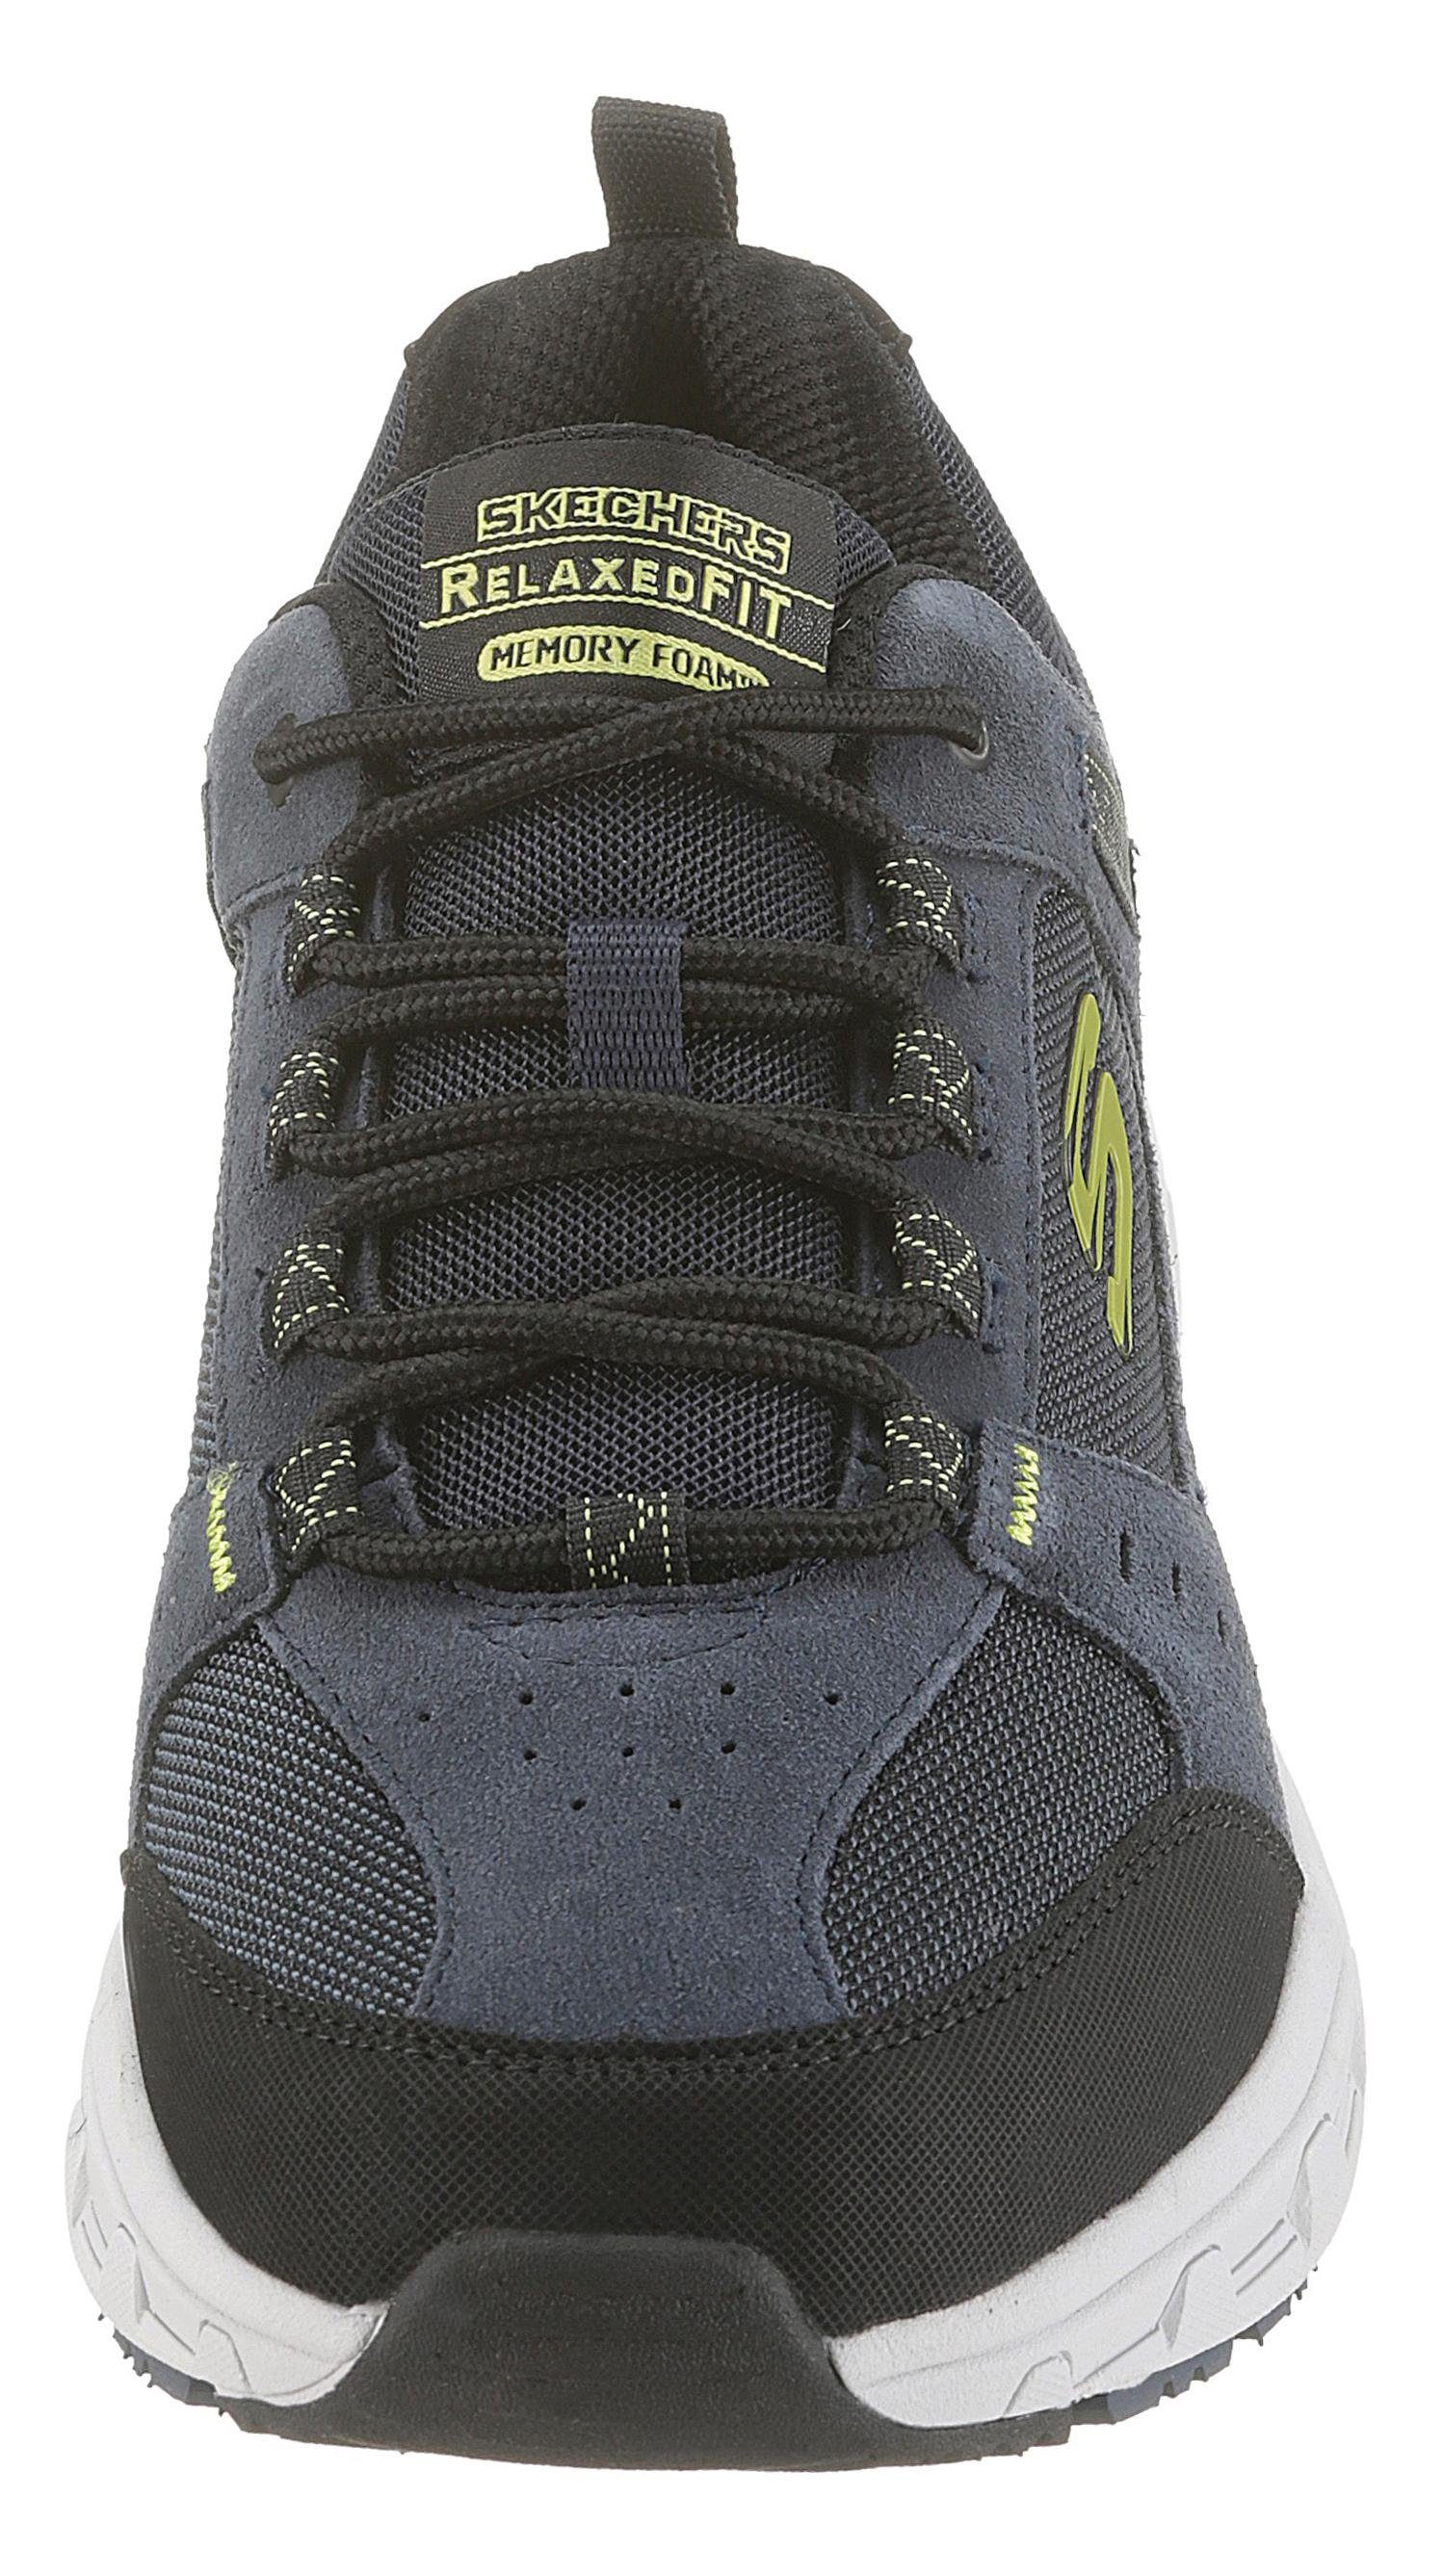 bequemer SKECHERS navy PERFORMANCE Memory Skechers Oak mit schwarz Foam-Ausstattung Sneaker Canyon